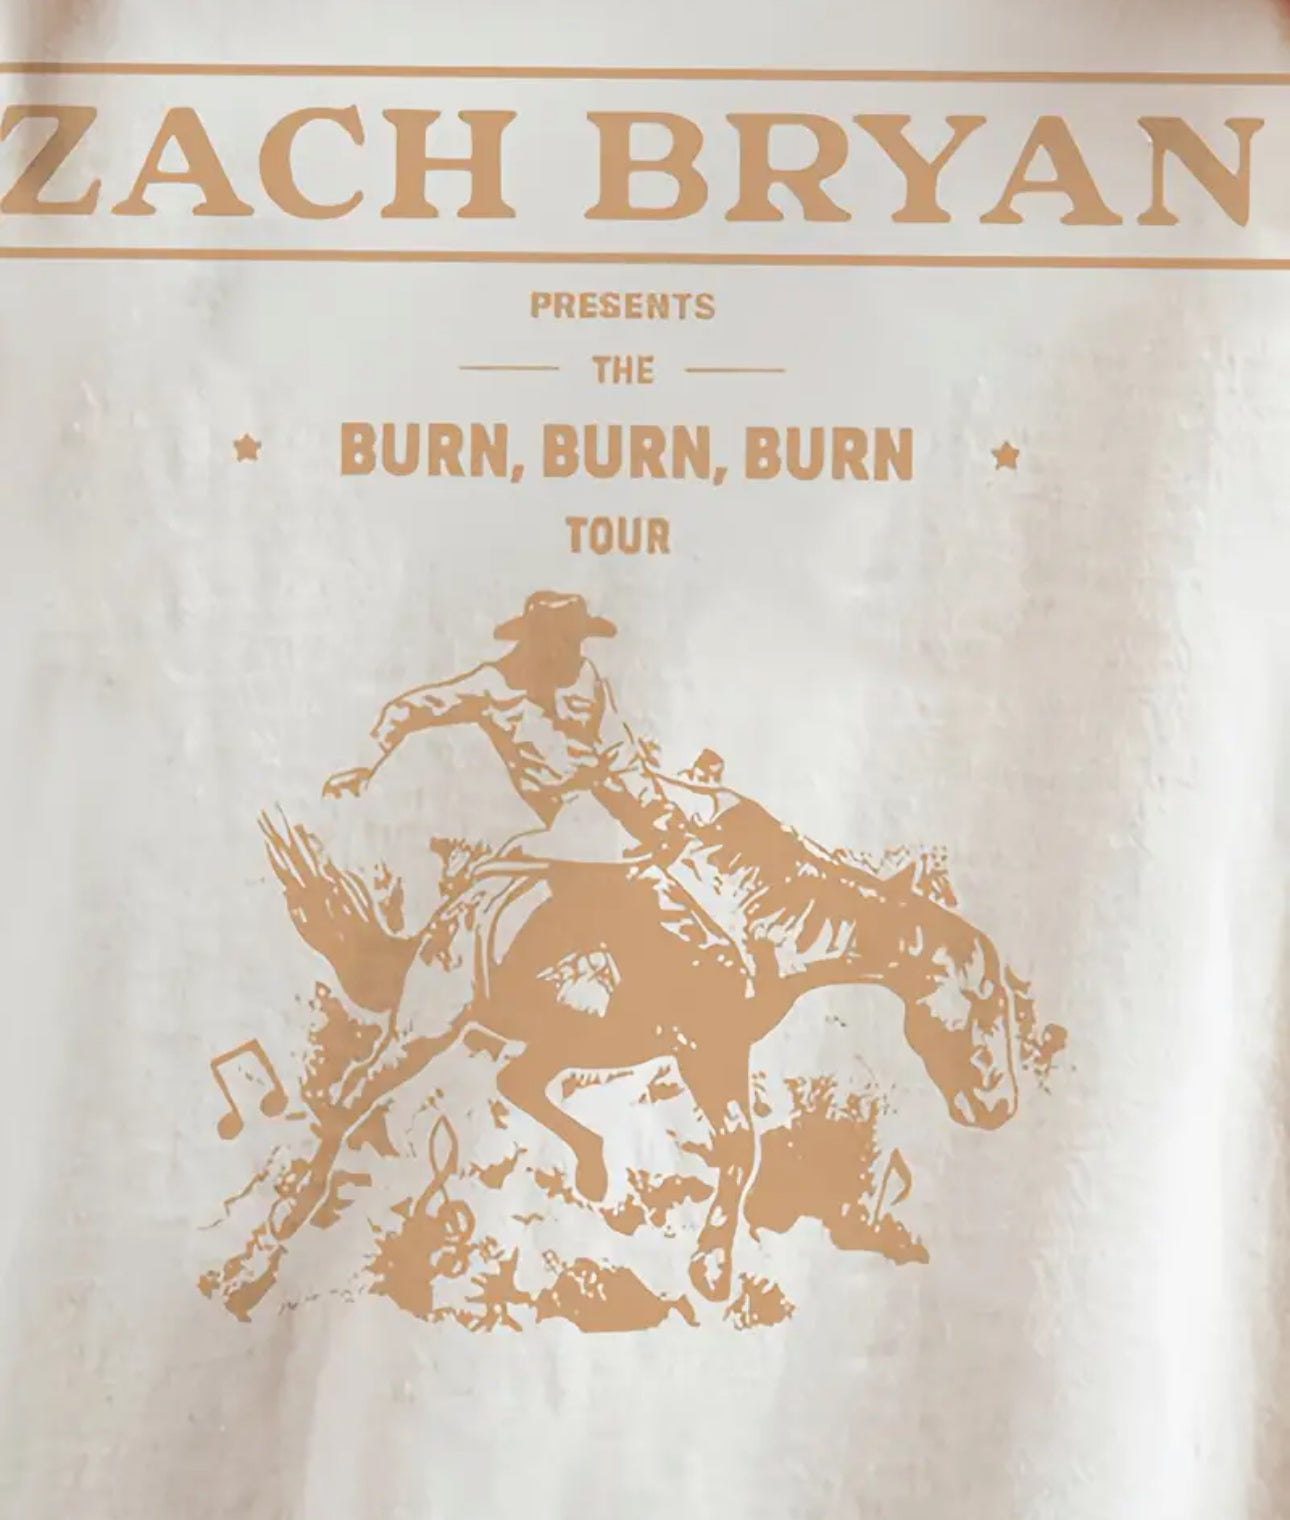 Zach Bryan Horse Riding & Letter Print T-Shirt Cream Graphic T-Shirt